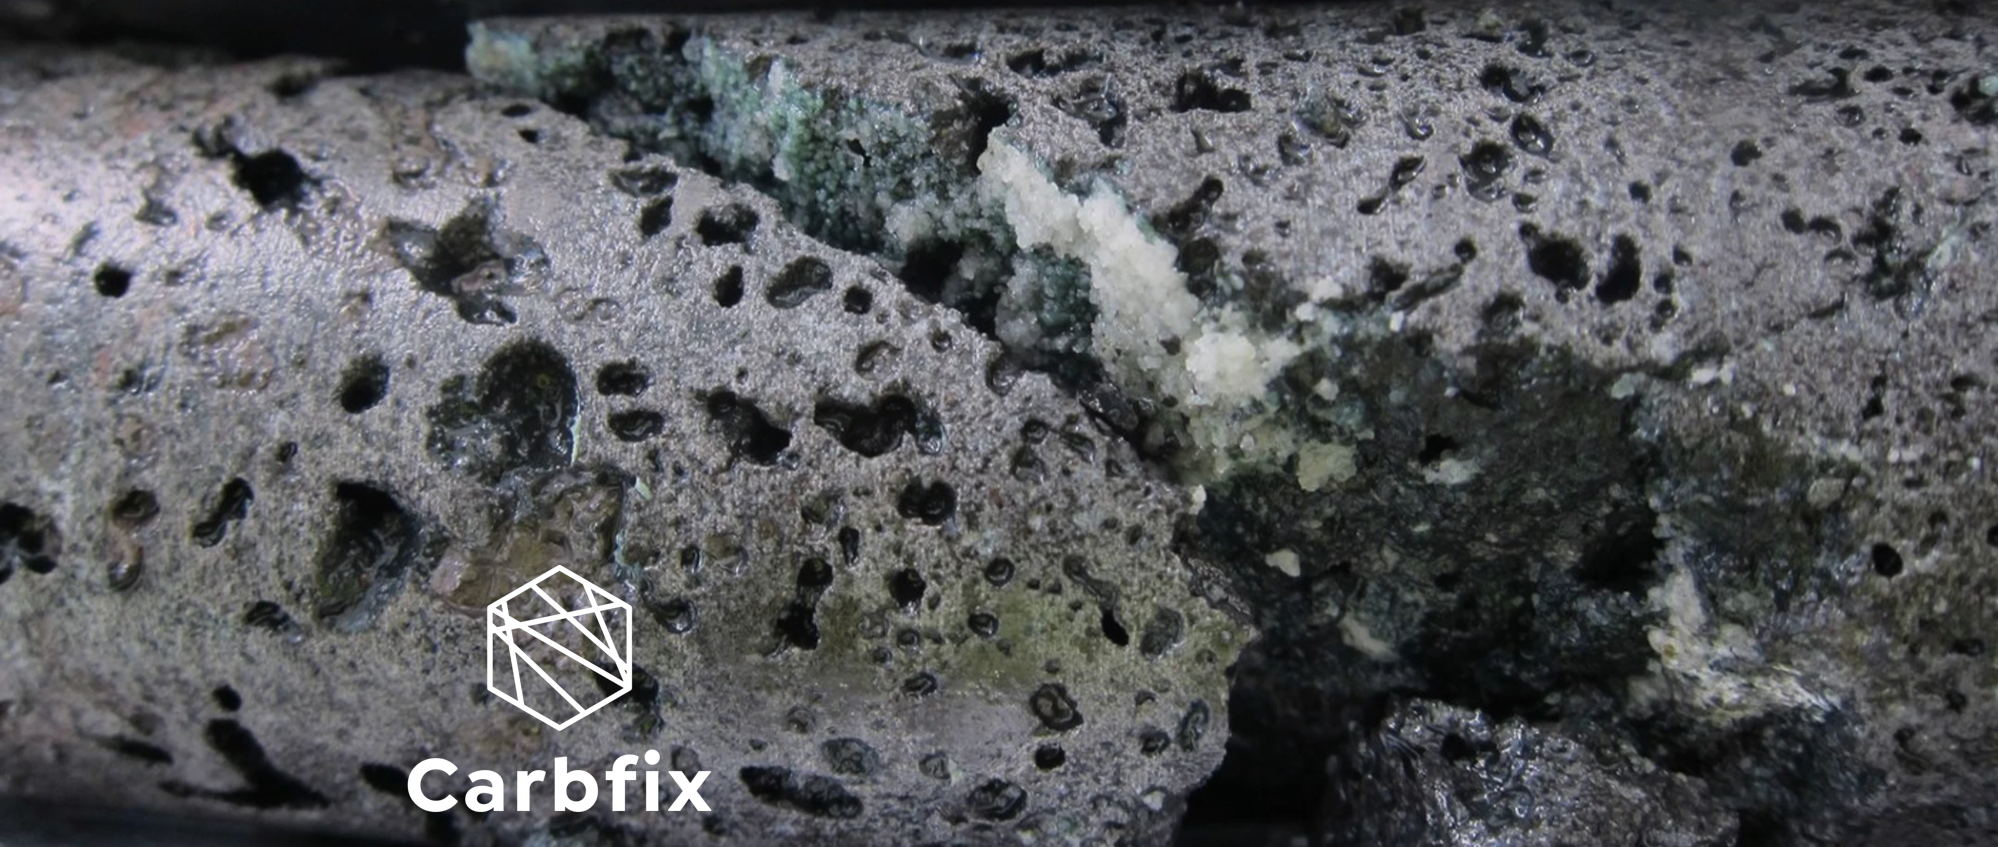 Carbfix core with carbonate minerals. 